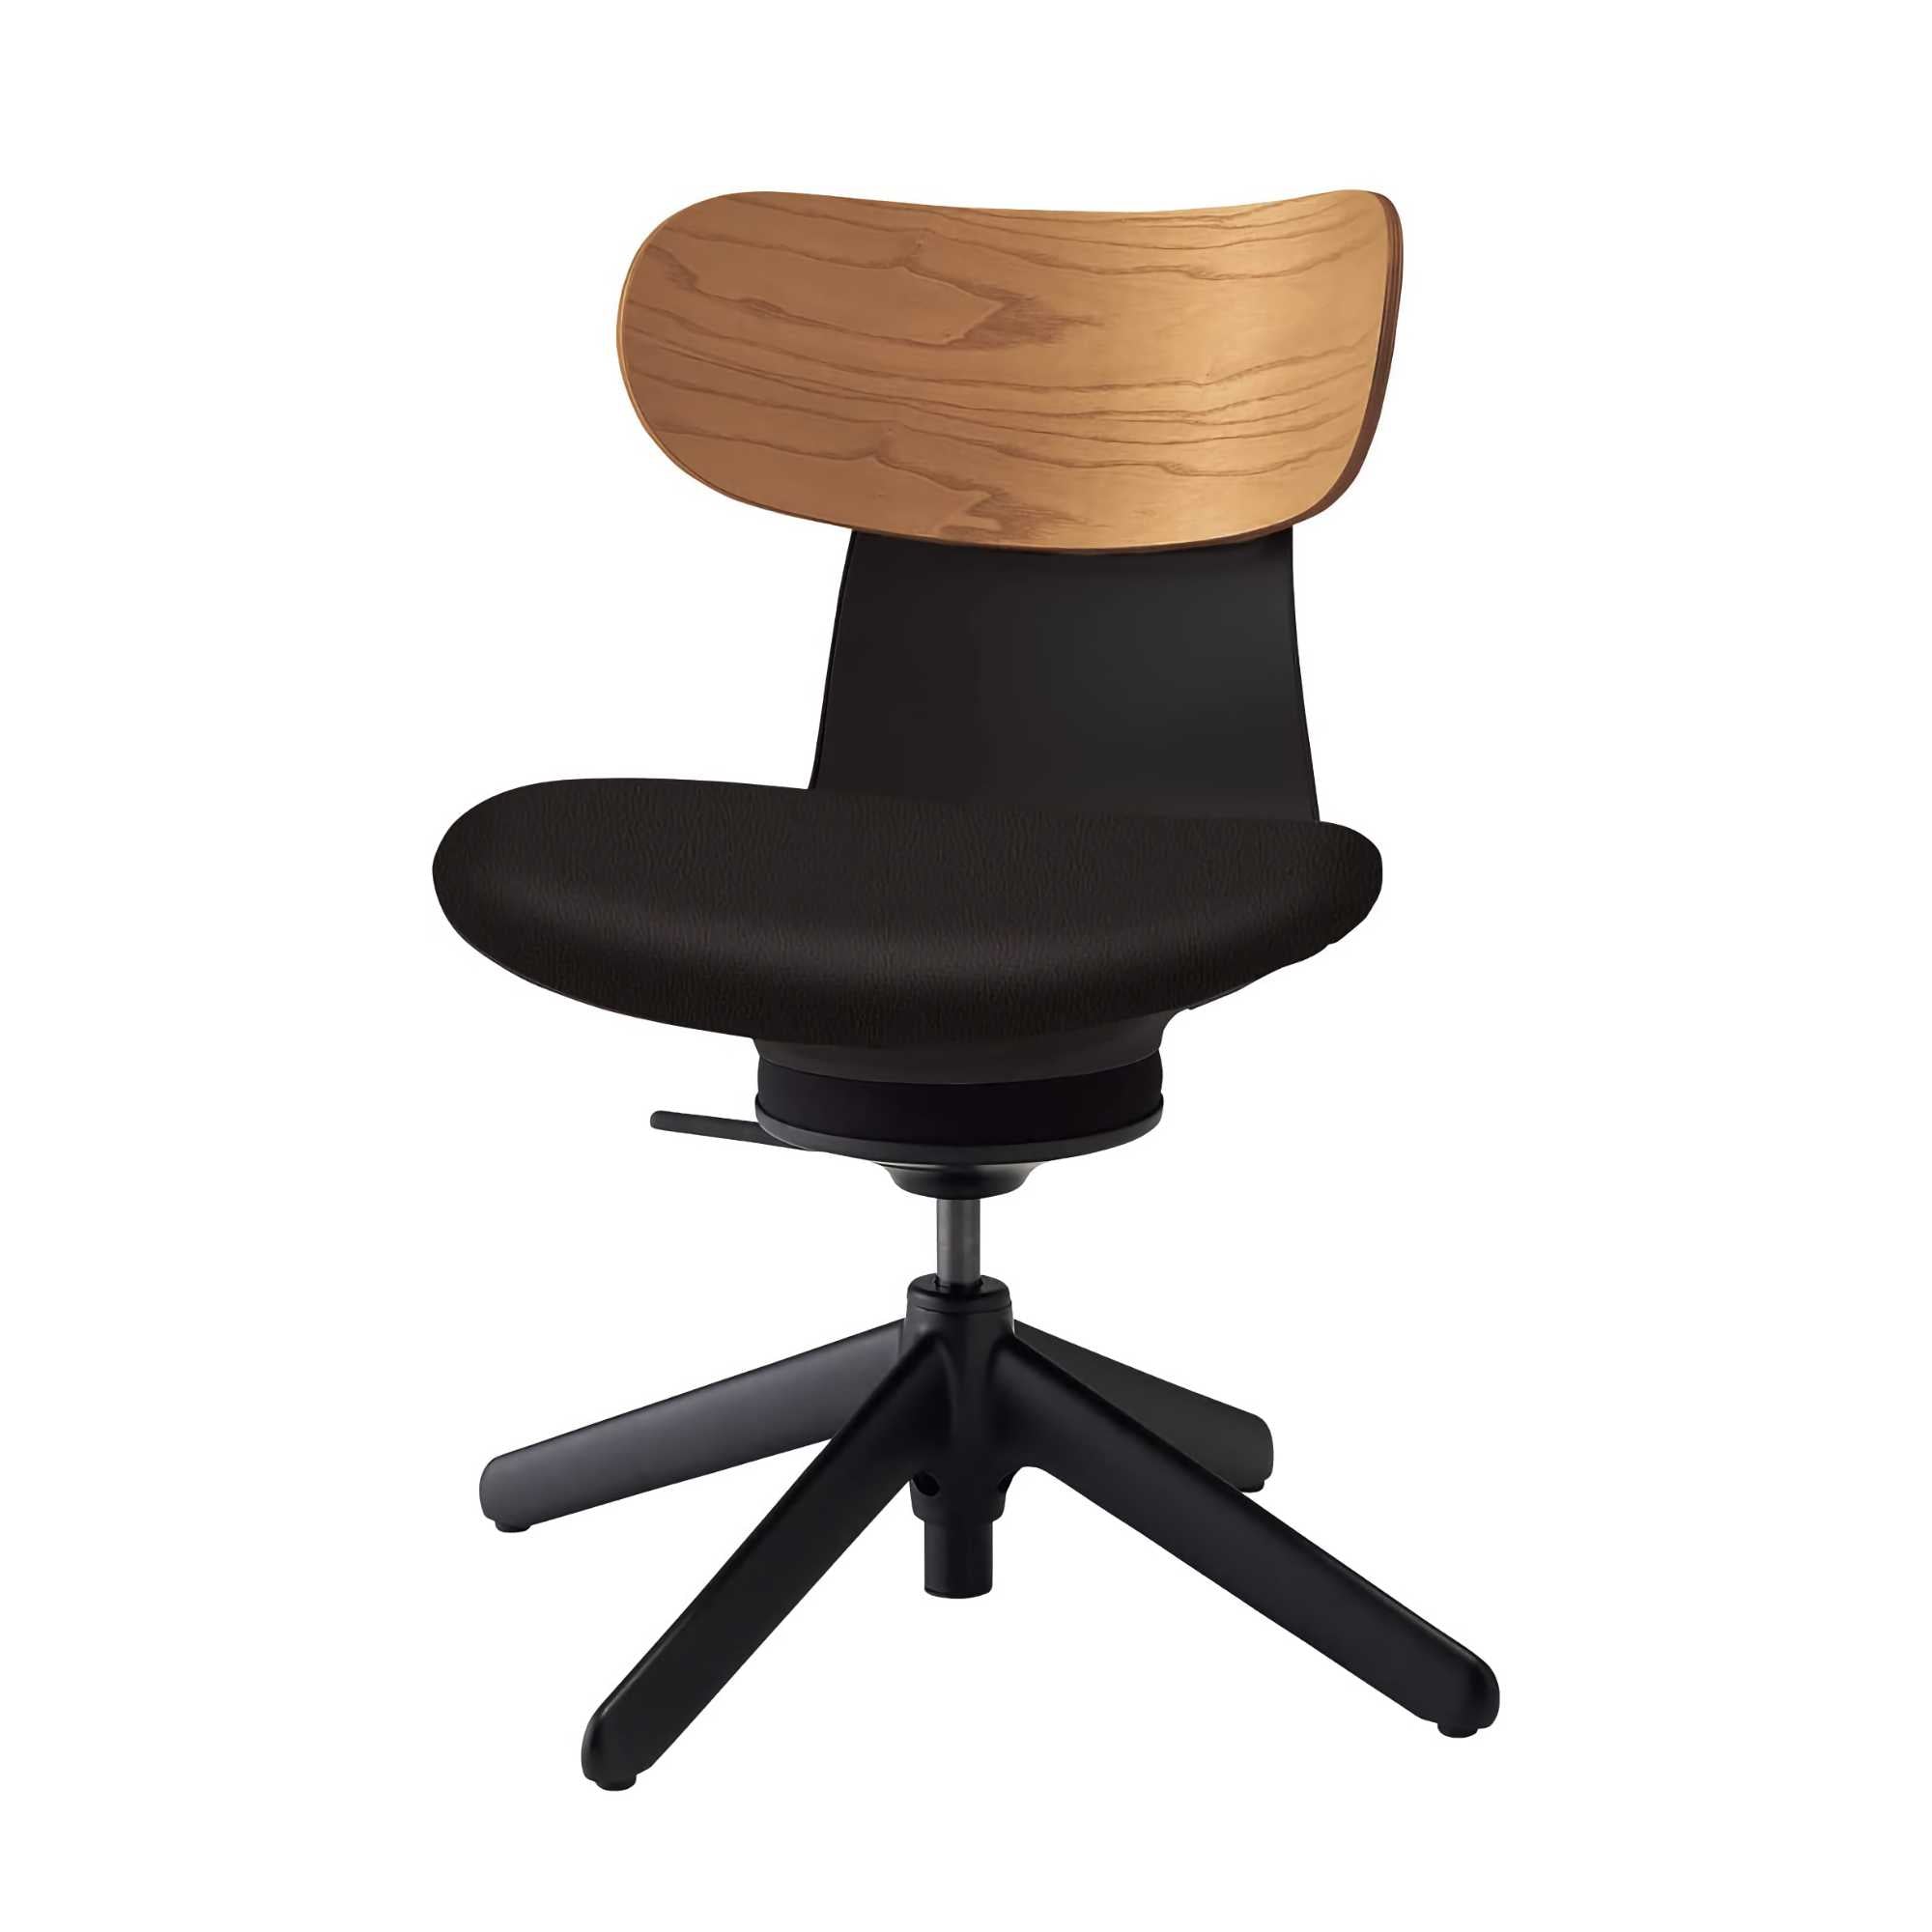 Kokuyo Inglife Office Chair Dark Plywood Back, black leather